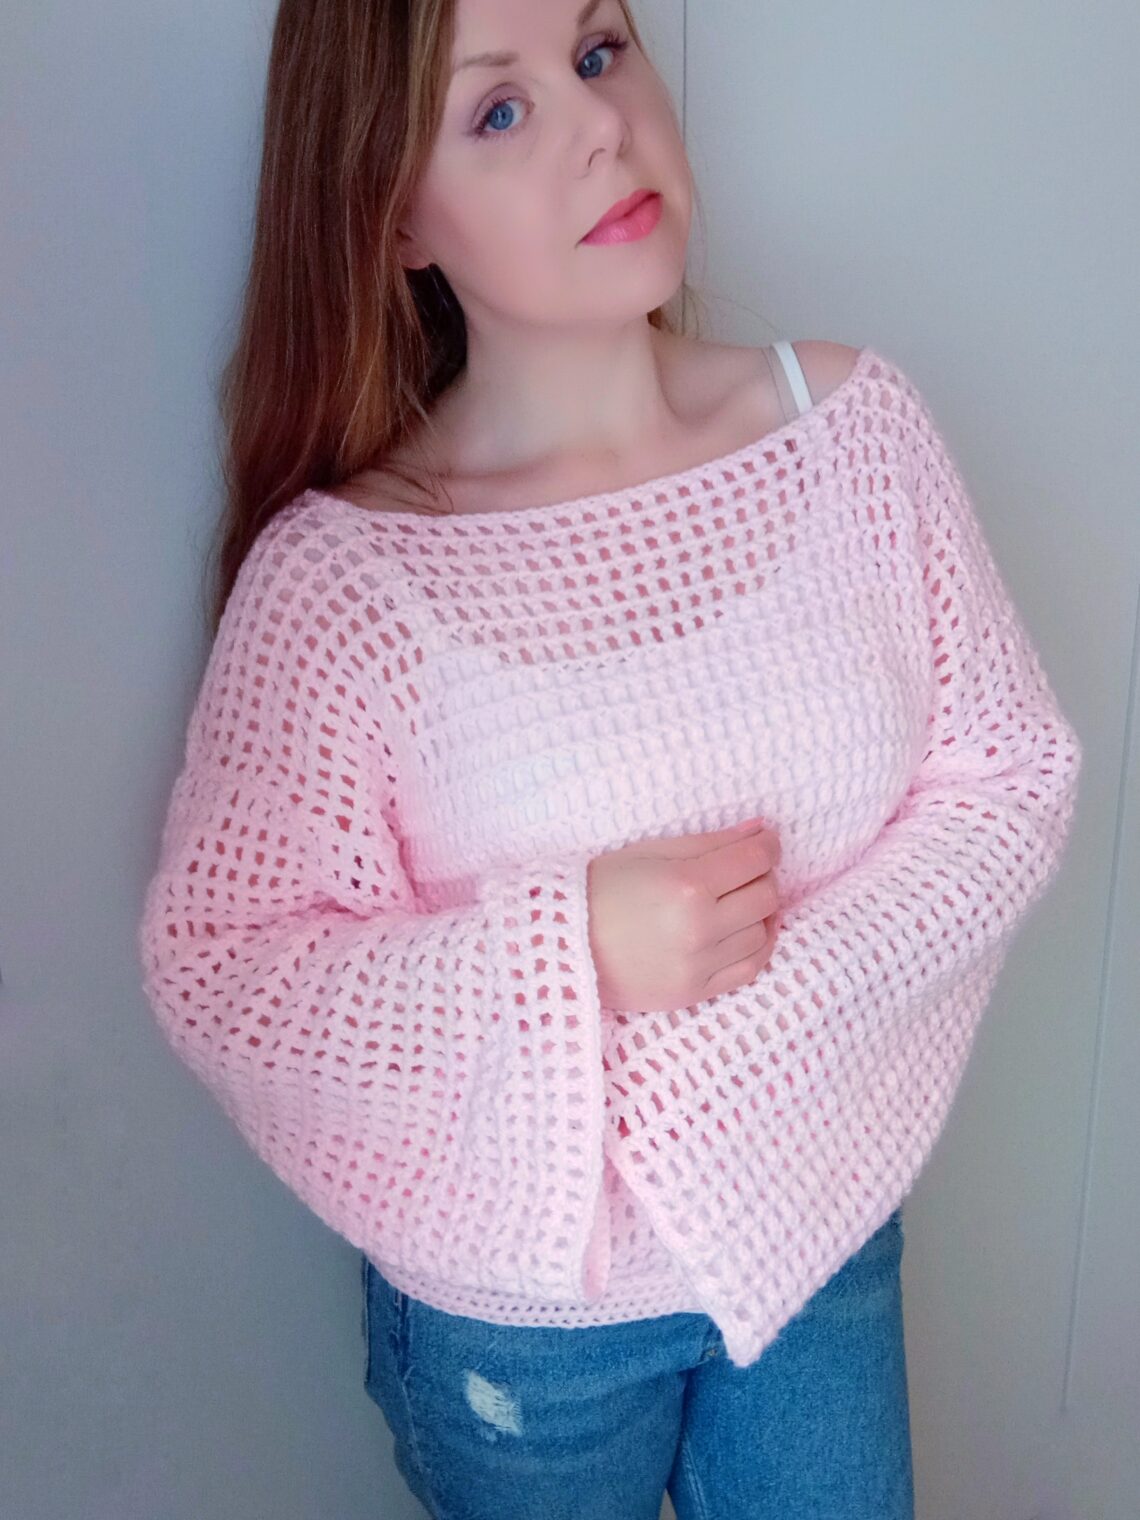 Crochet Mesh Sweater Free Pattern